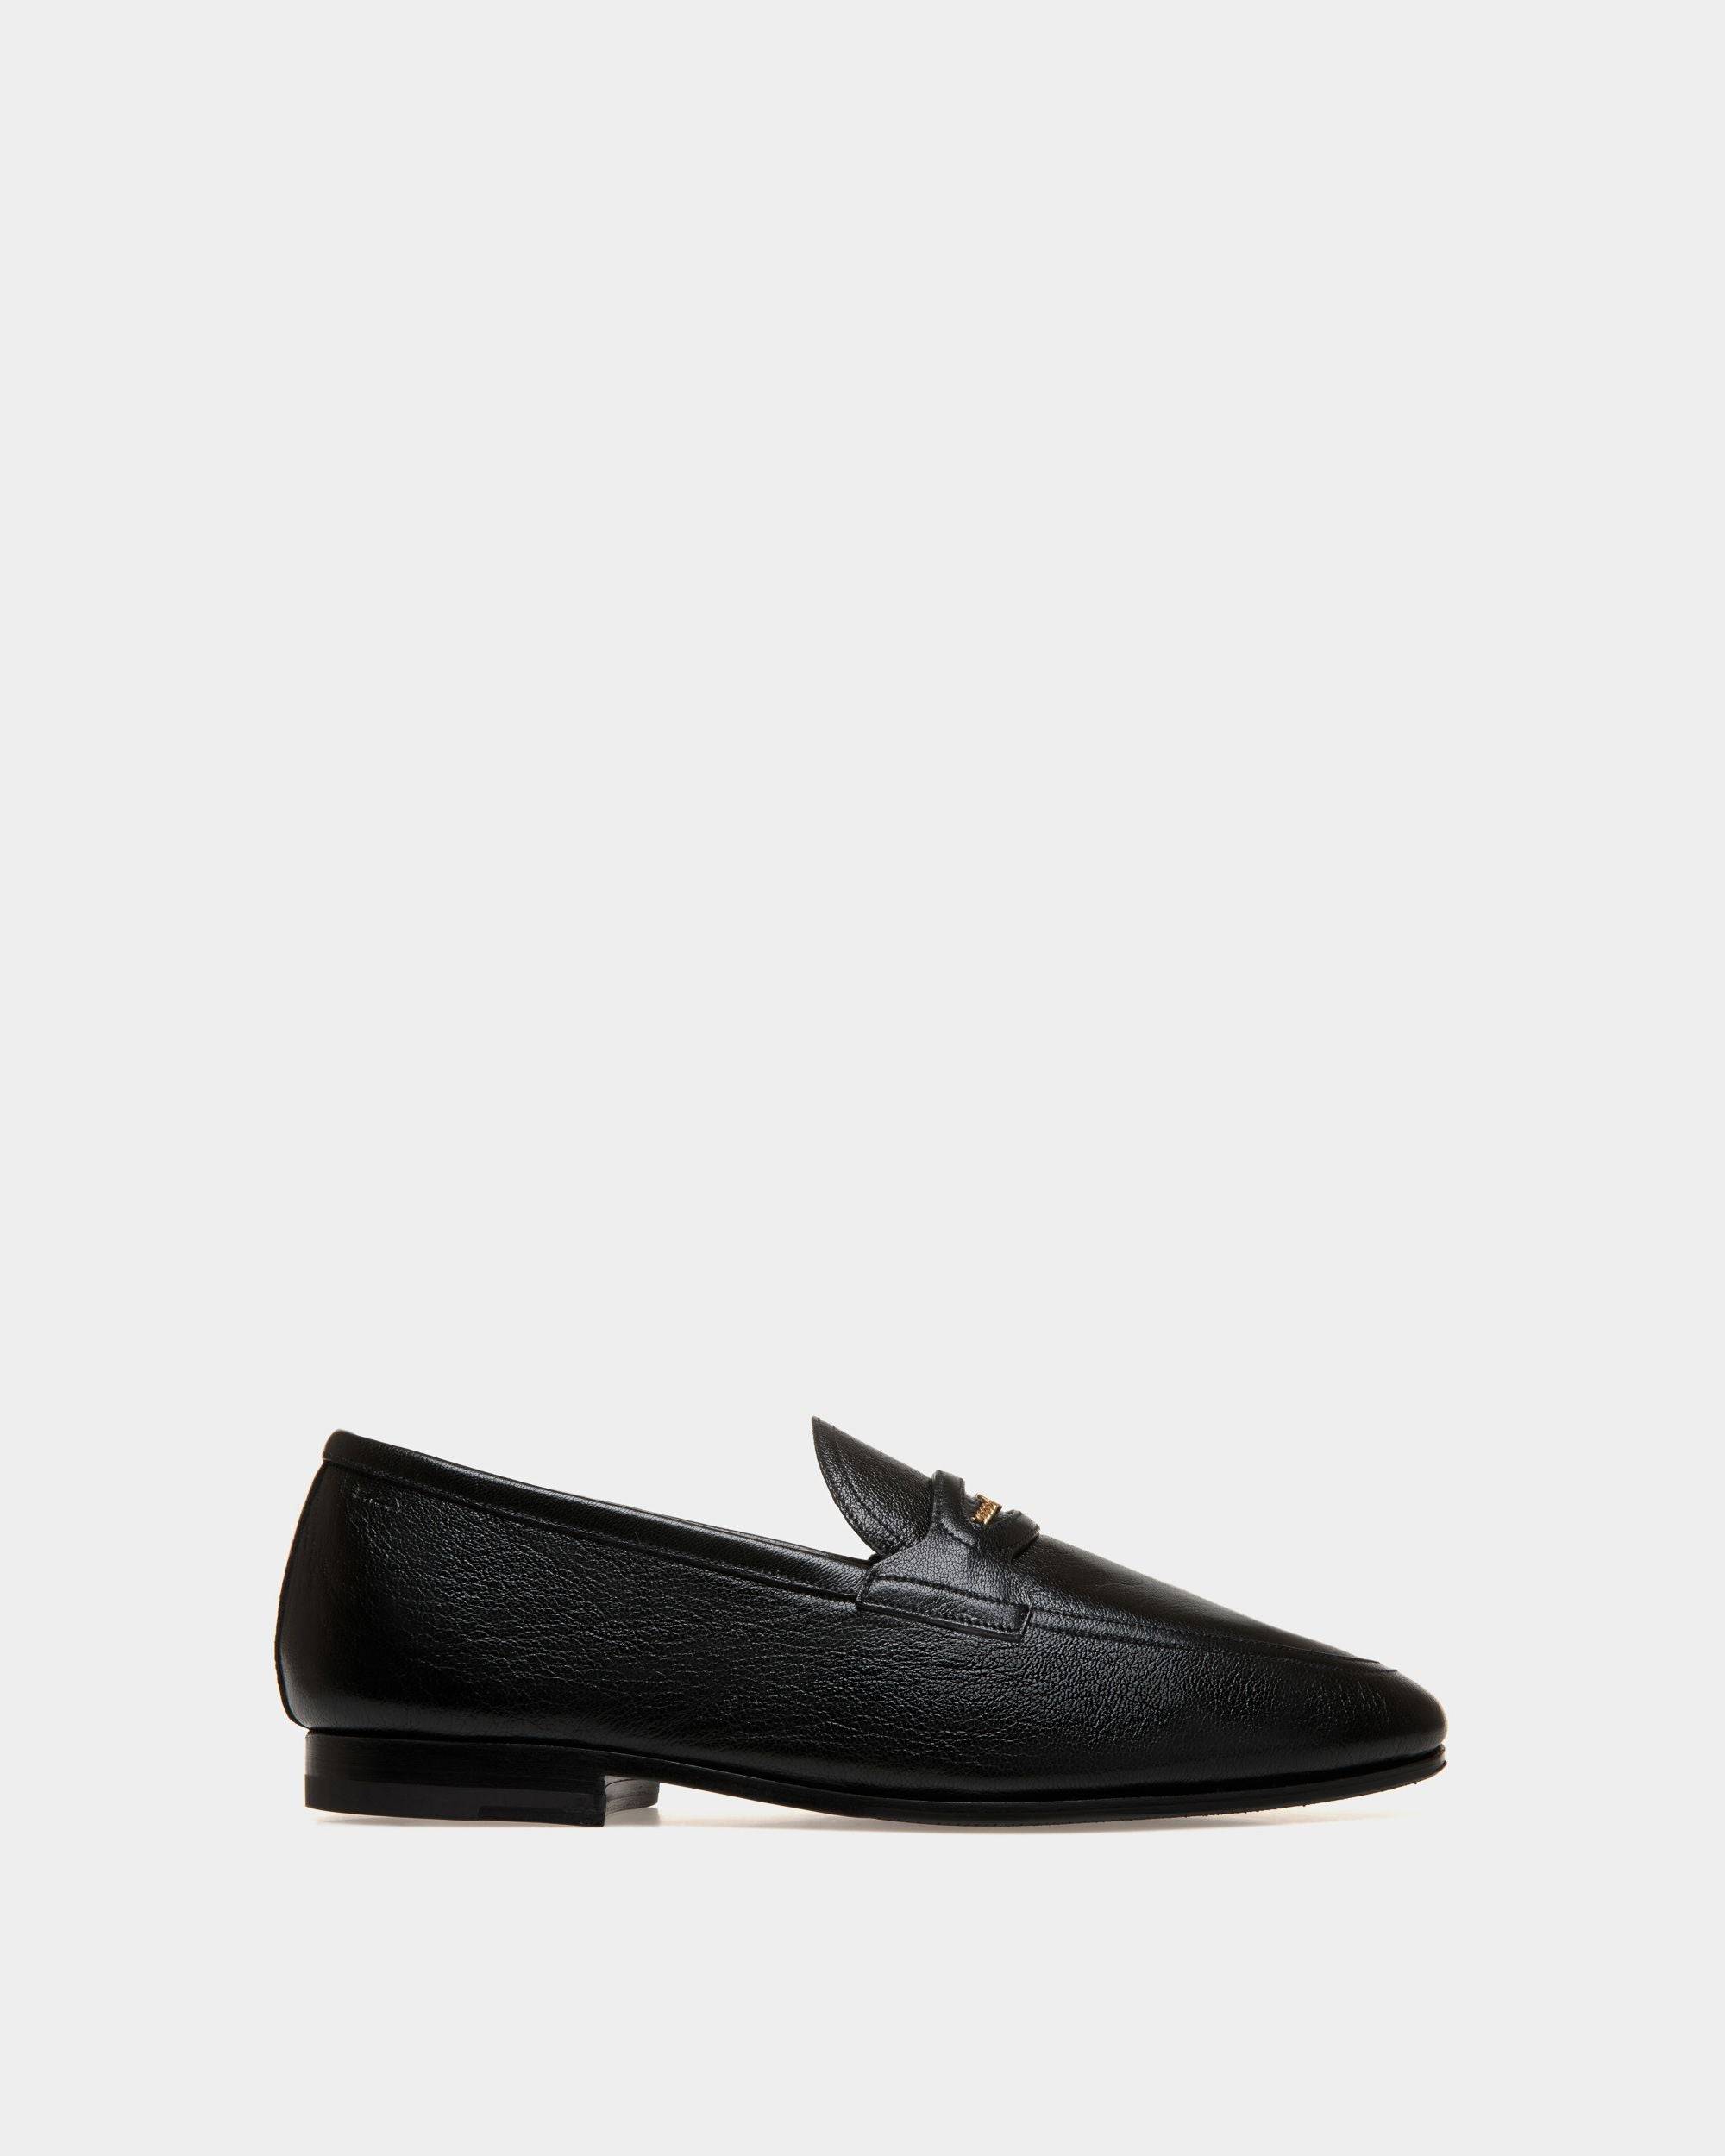 Plume | Men's Loafer in Black Grained Leather | Bally | Still Life Side